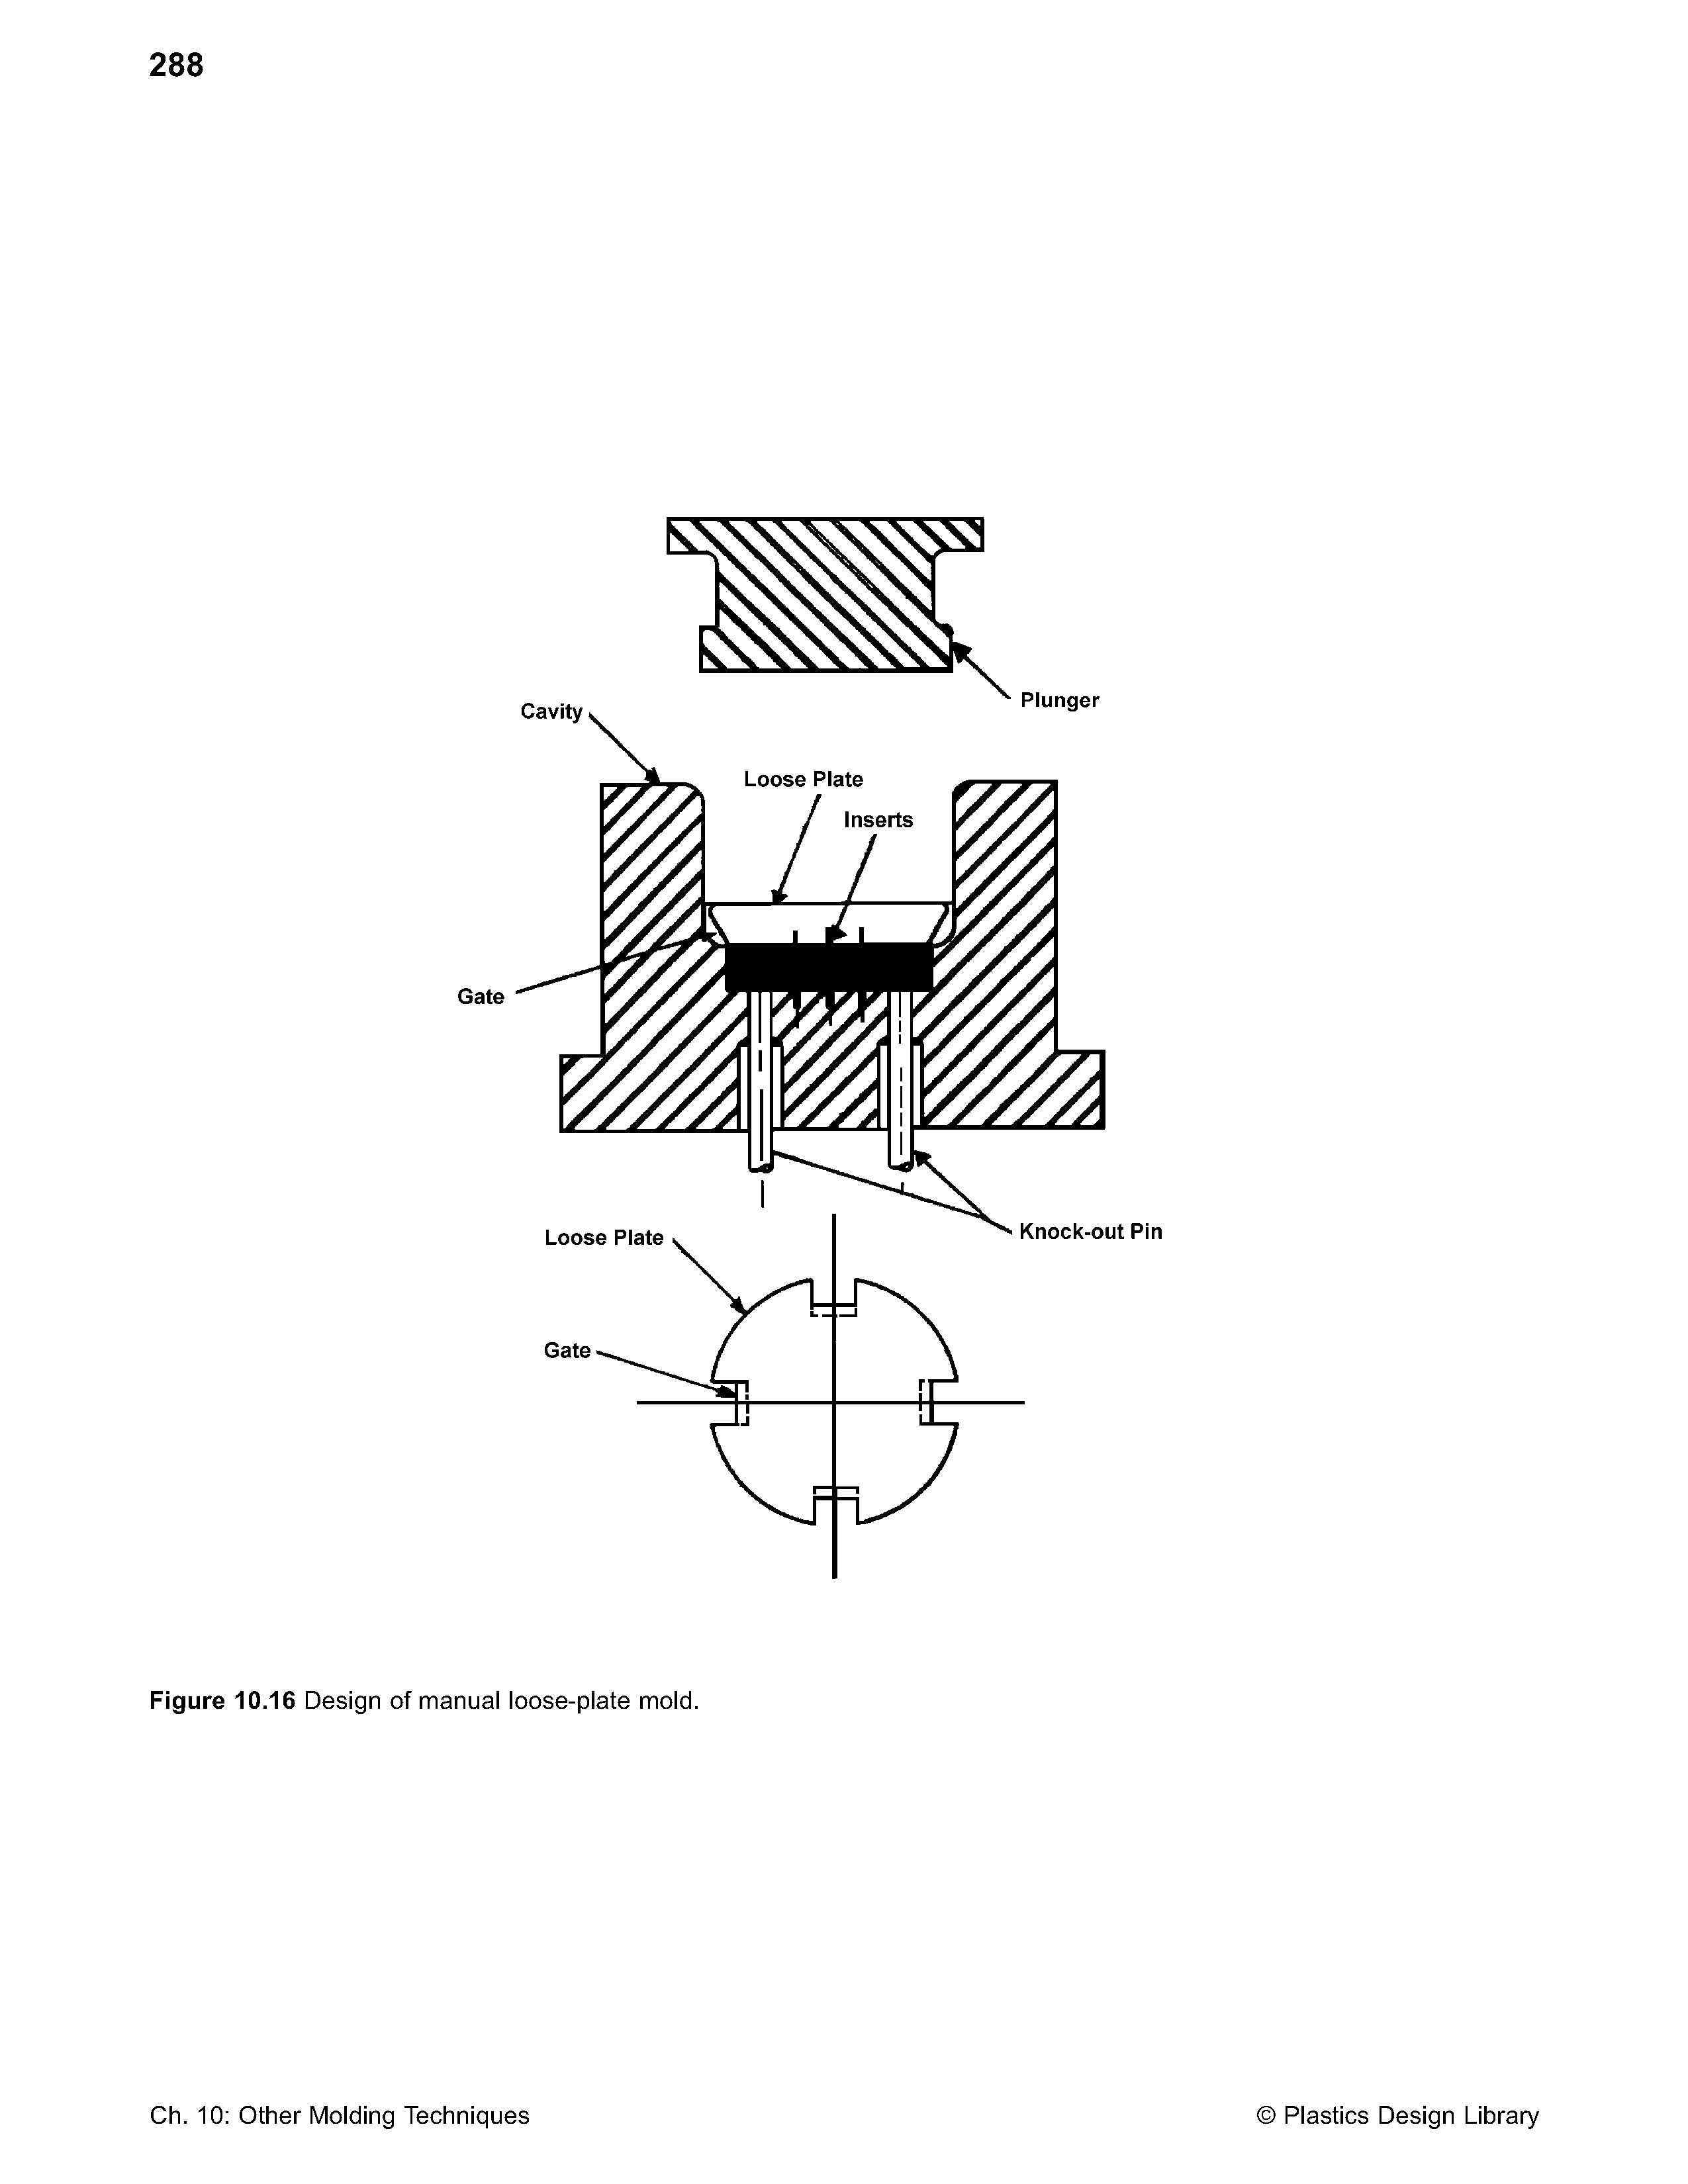 Figure 10.16 Design of manual loose-plate mold.